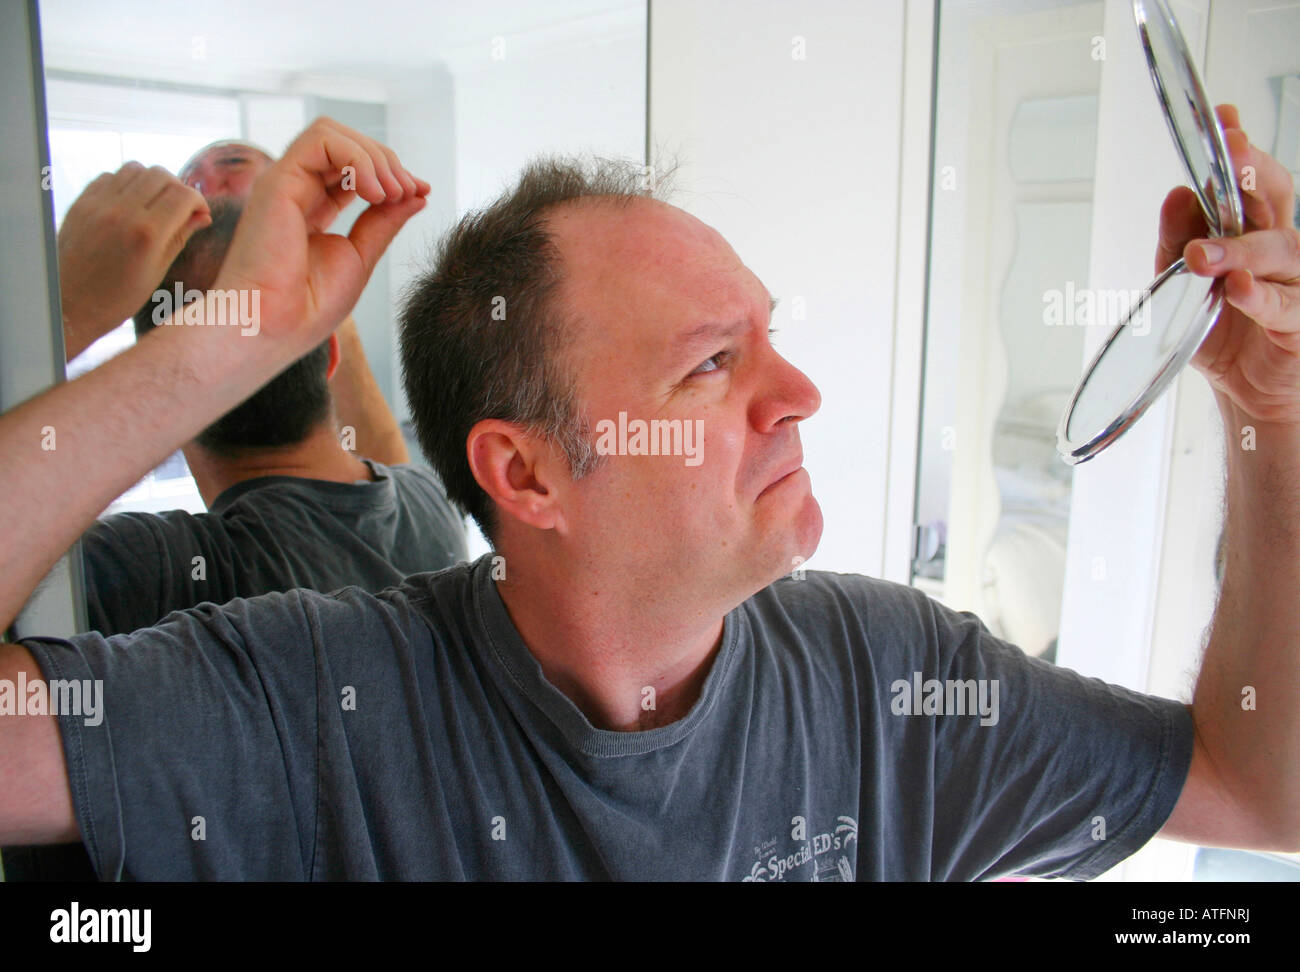 Man checking his thinning hair Stock Photo